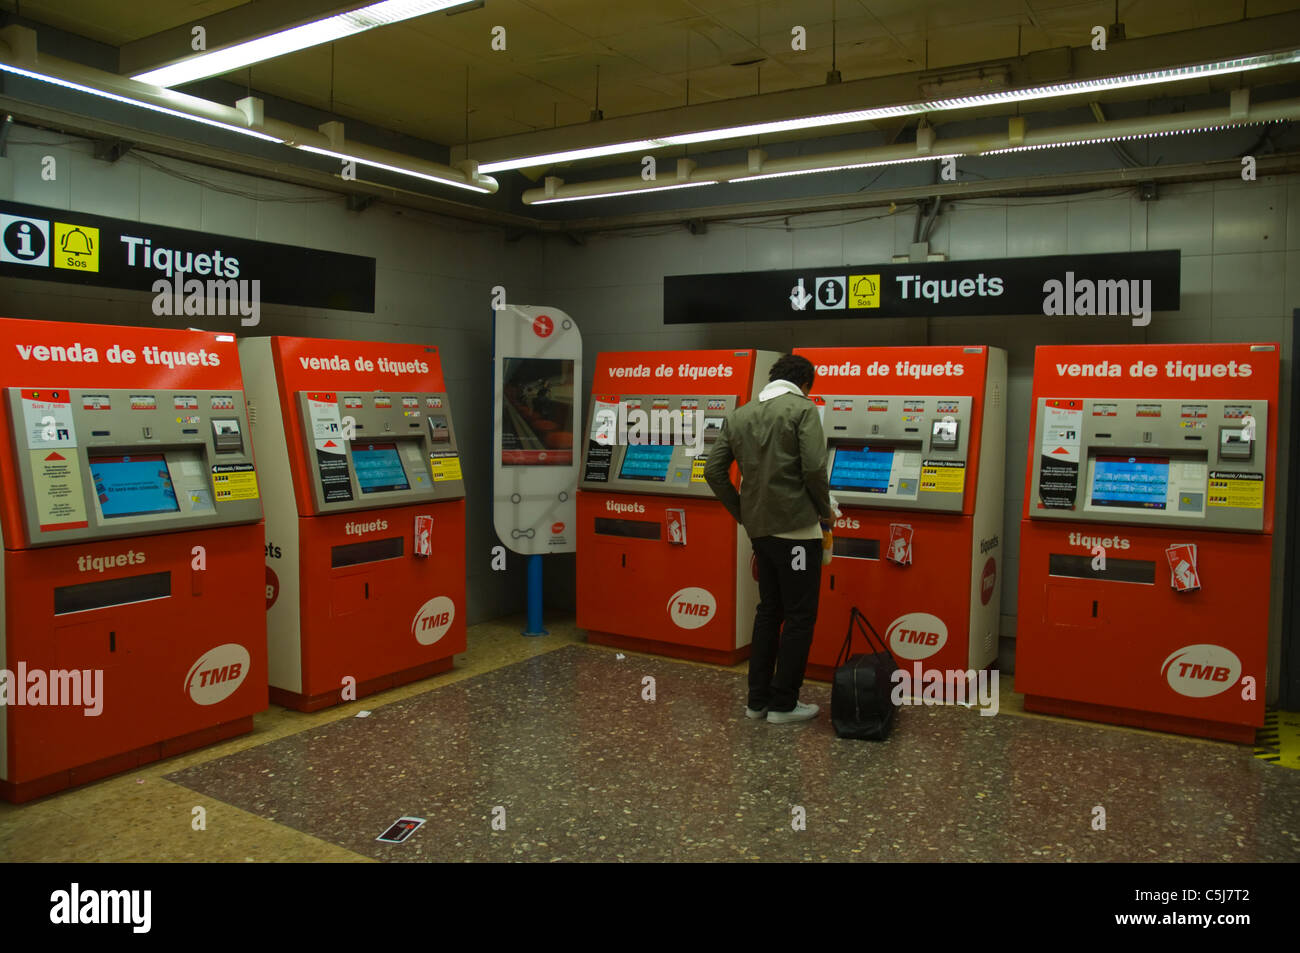 Distributeurs de tickets de métro Sants Estacio central de la station de métro Catalunya Barcelone Espagne Europe Banque D'Images